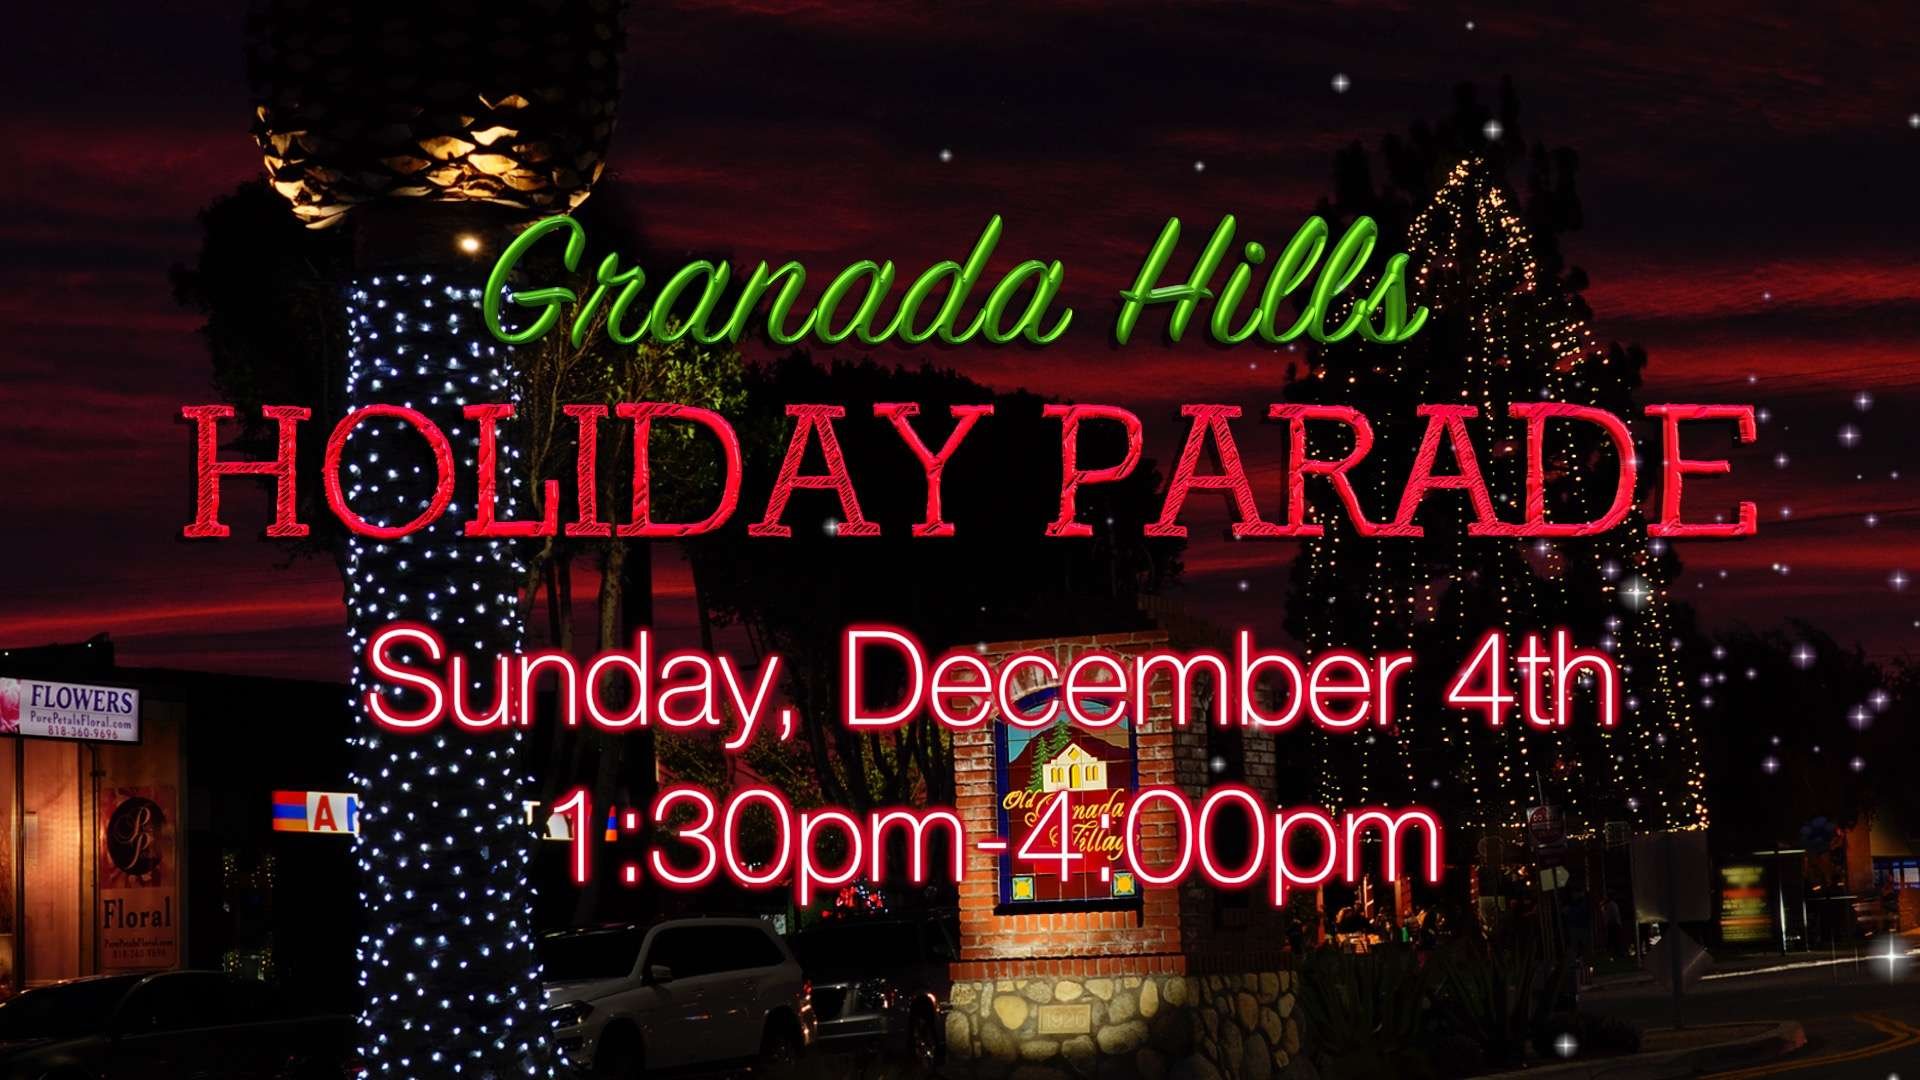 2016 Granada Hills Holiday Parade this Sunday